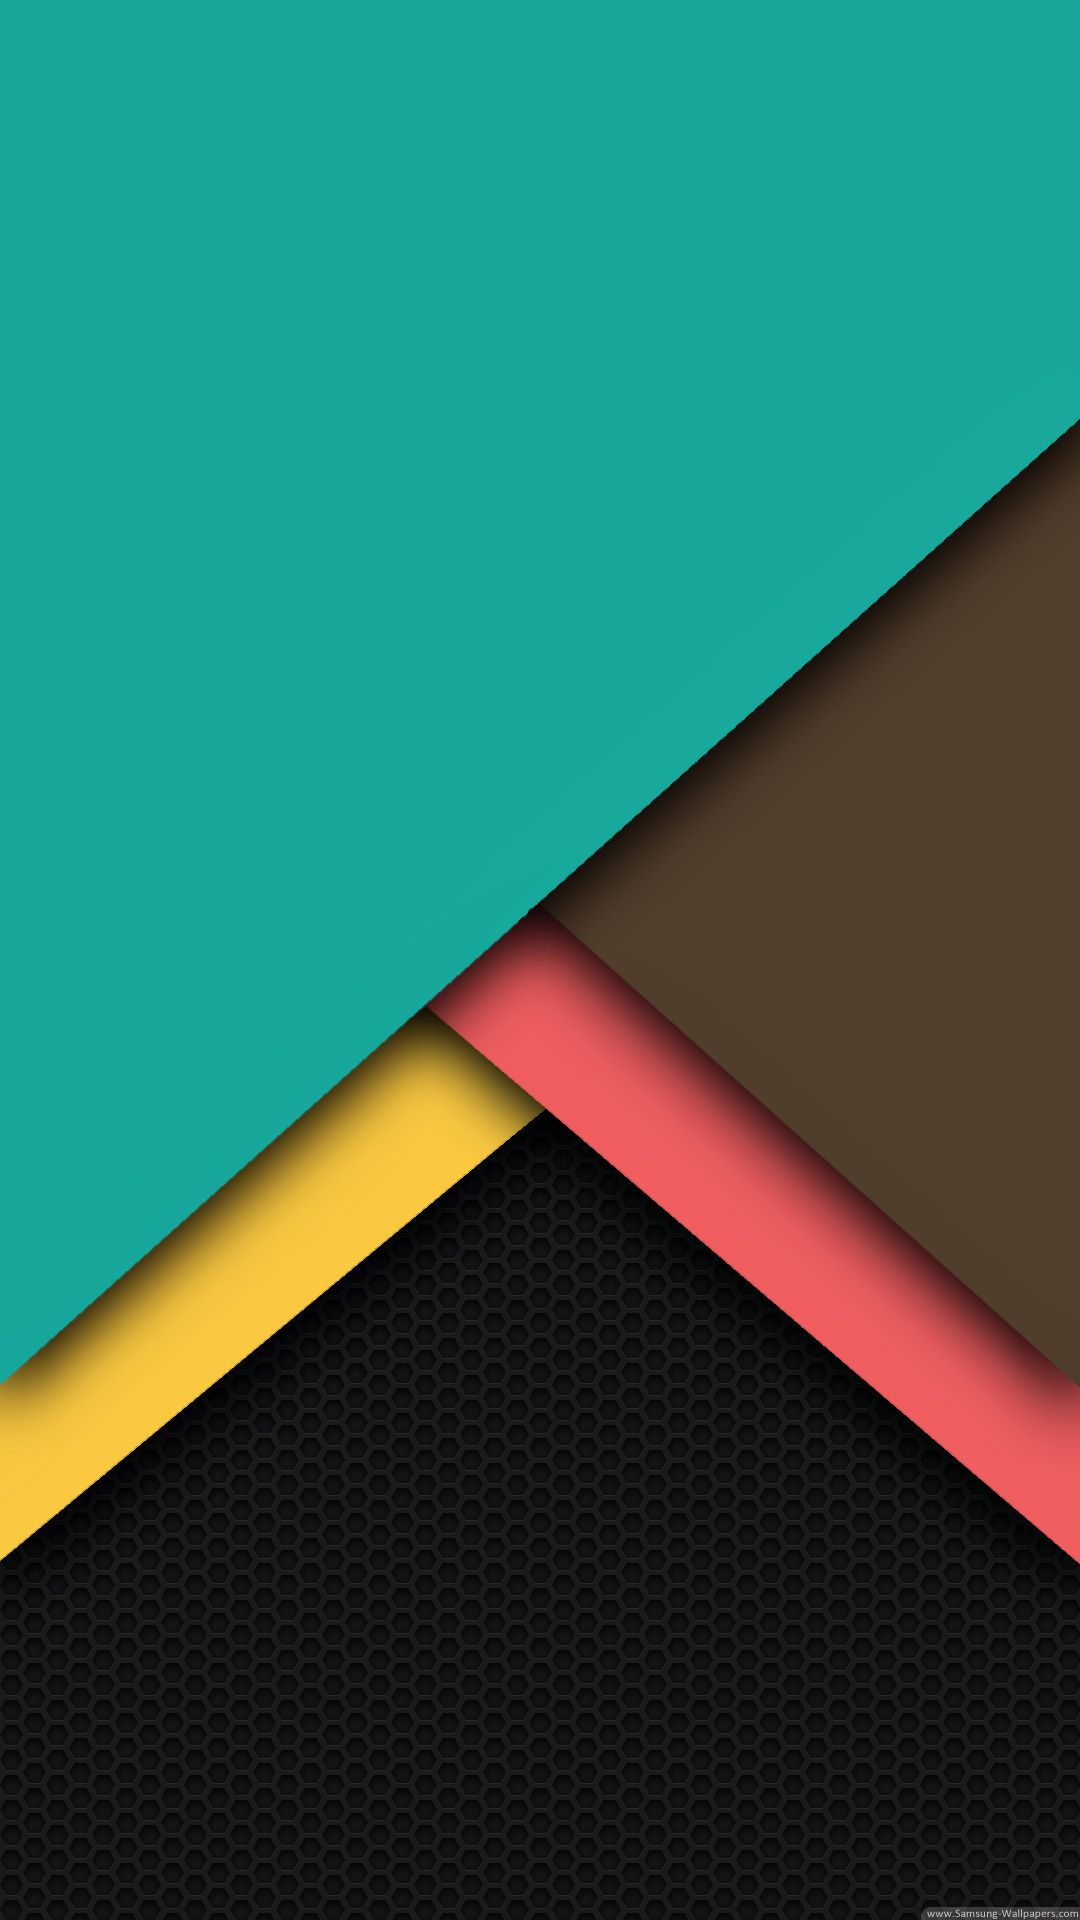 Nexus 6 Android Material Design Wallpaper